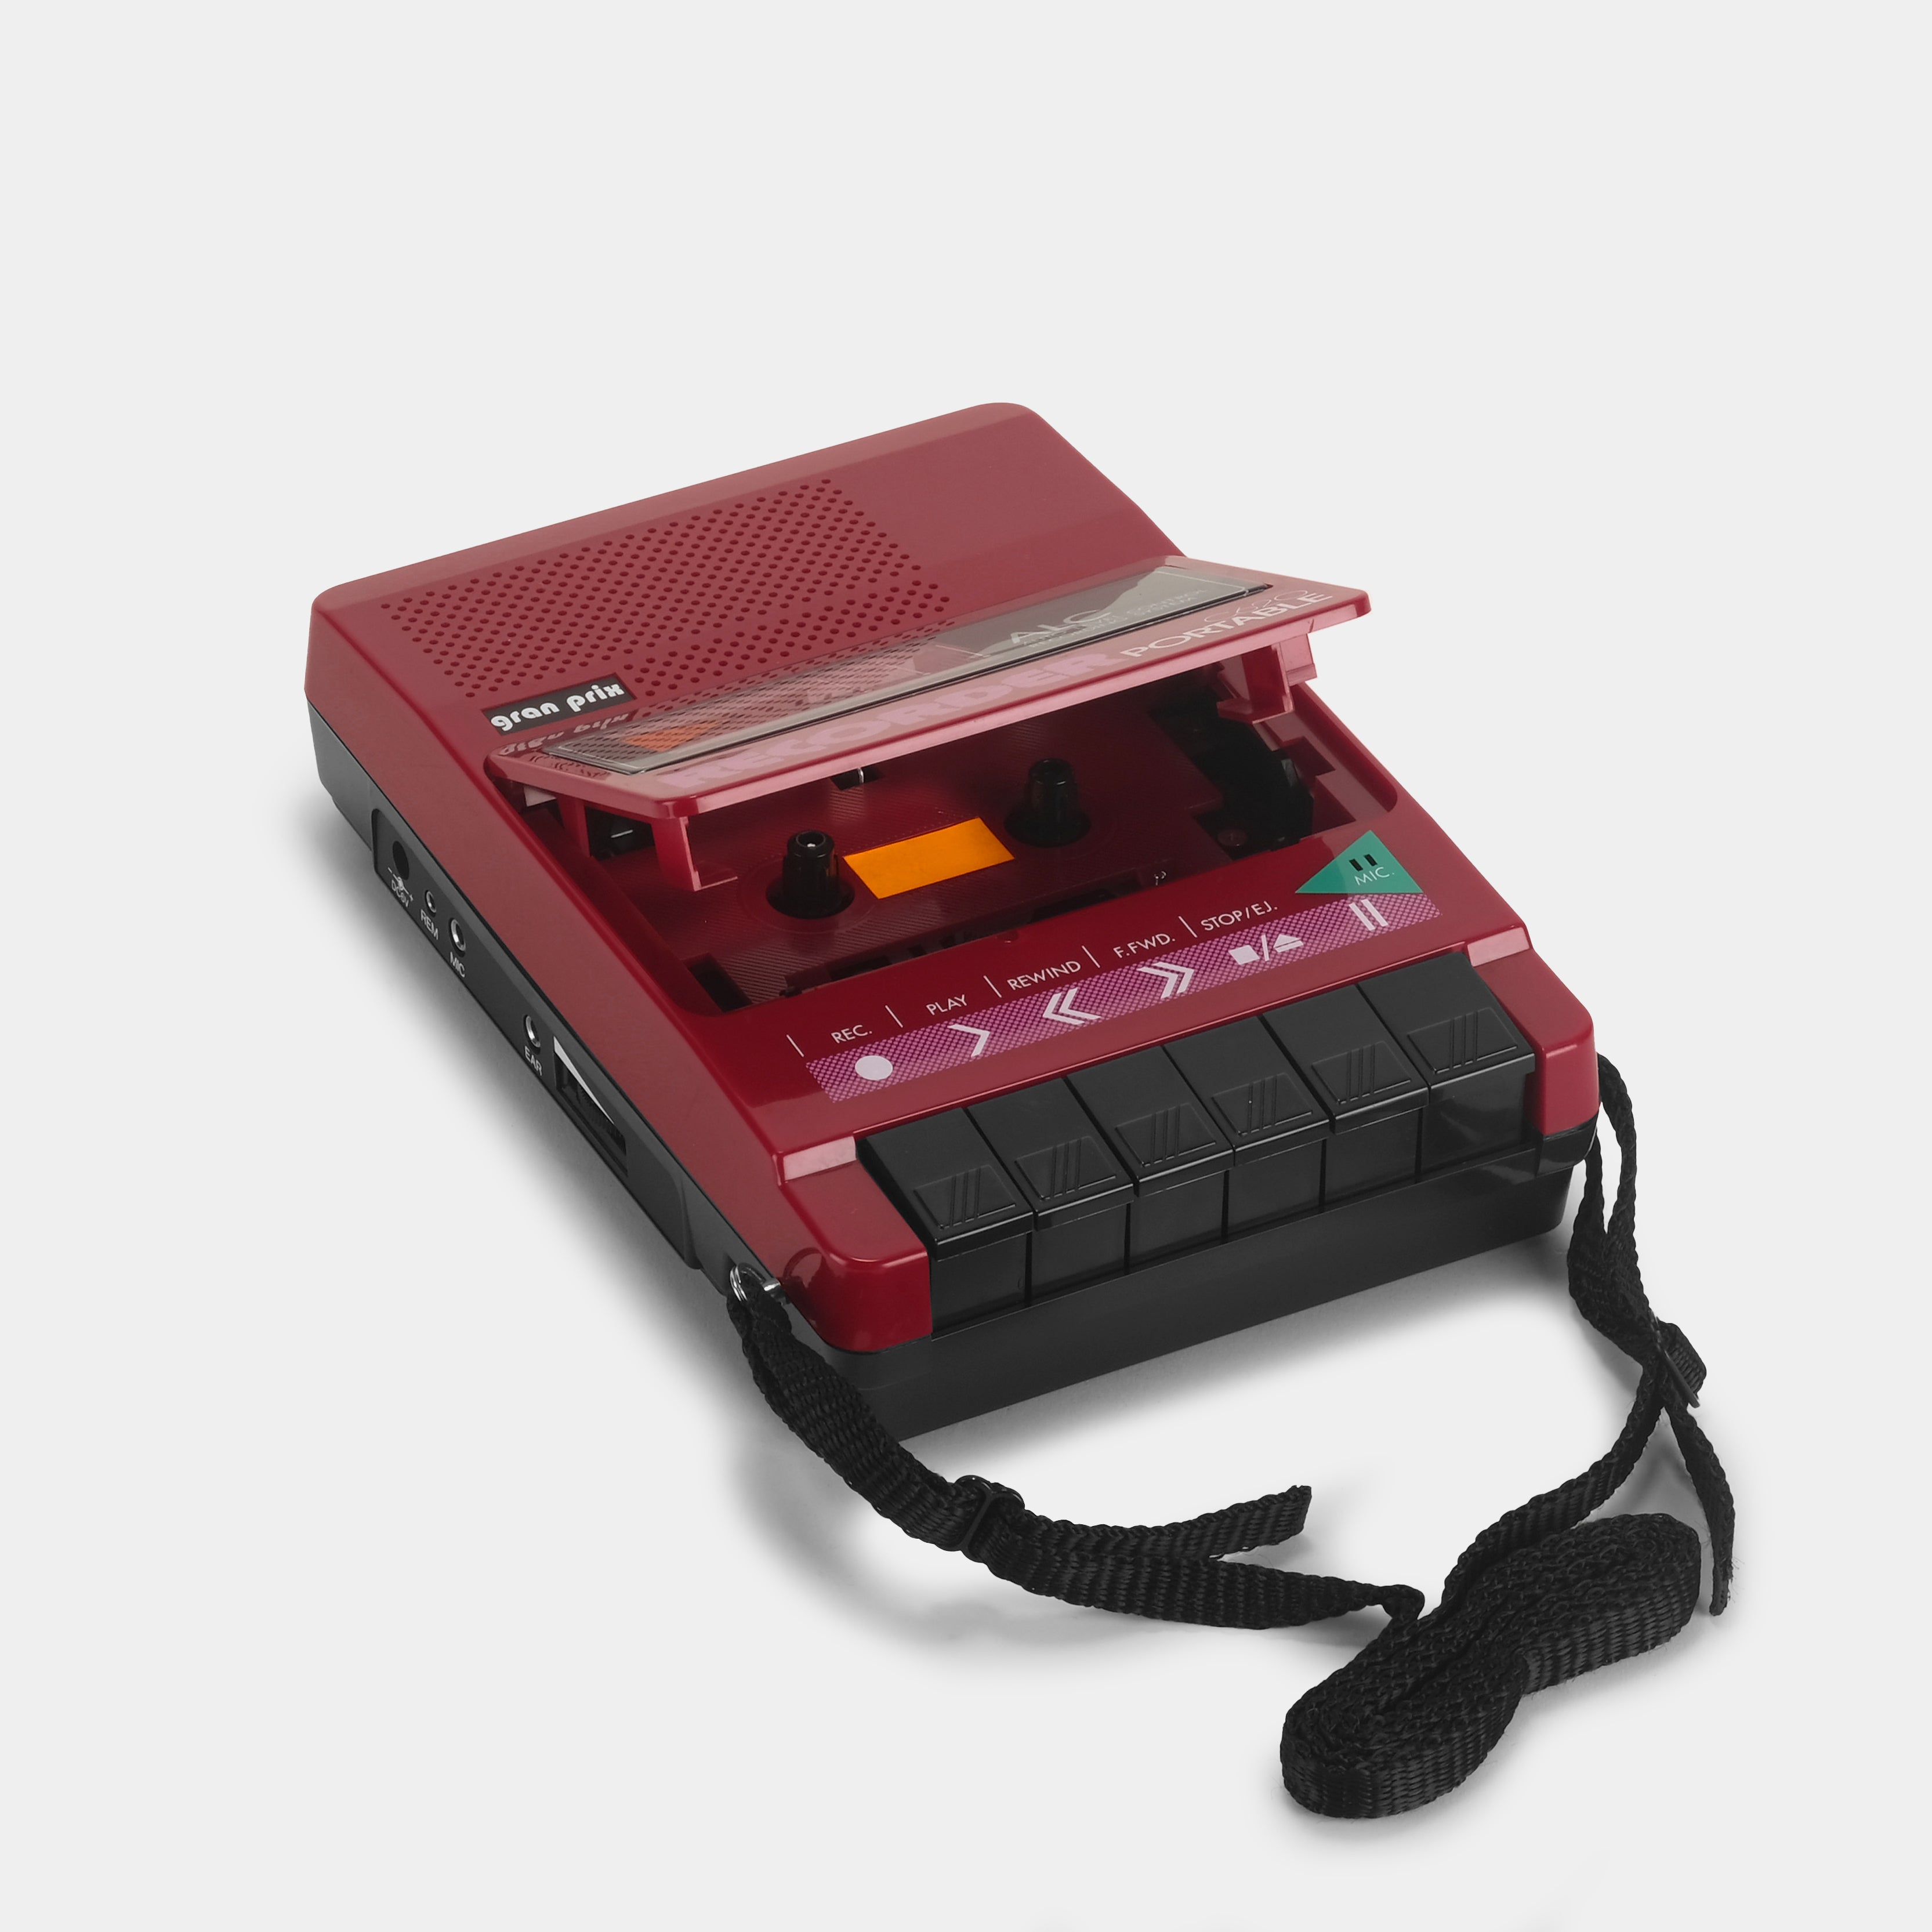 Gran Prix C620 Portable Cassette Player